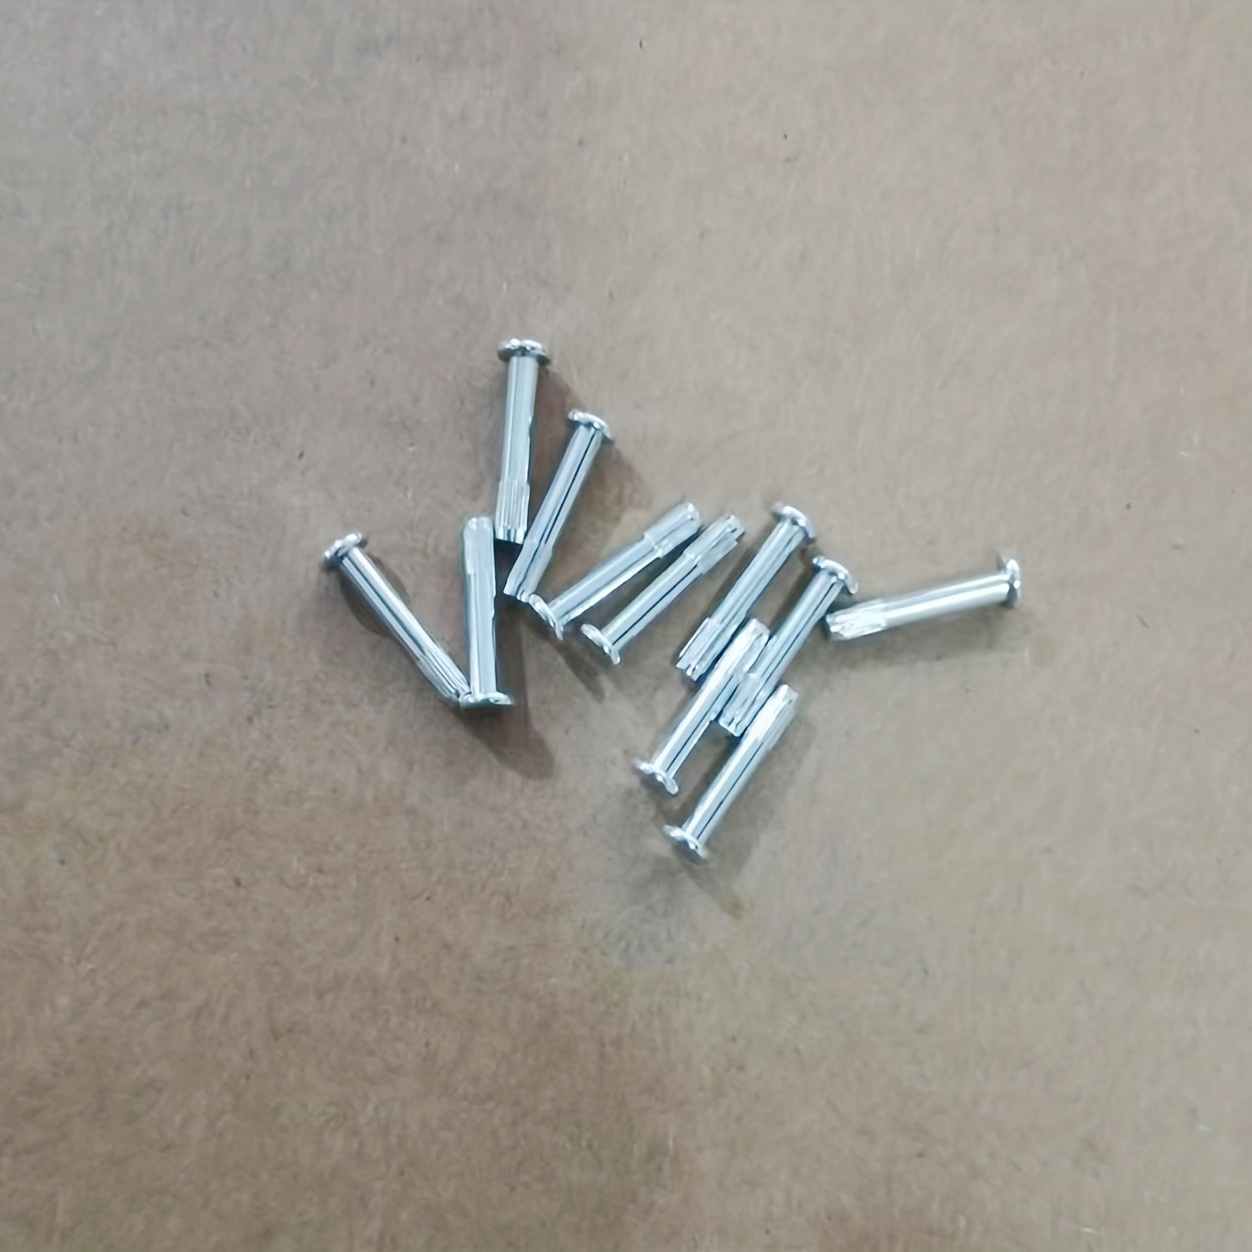 390Pcs Roll Pin Assortment Set, Slotted Spring Pins, Spring Dowel Tension  Roll Pin,M1.5 M2 M2.5 M3 M4 M5 M6 13Types Spring Steel Pin Metal Hardware